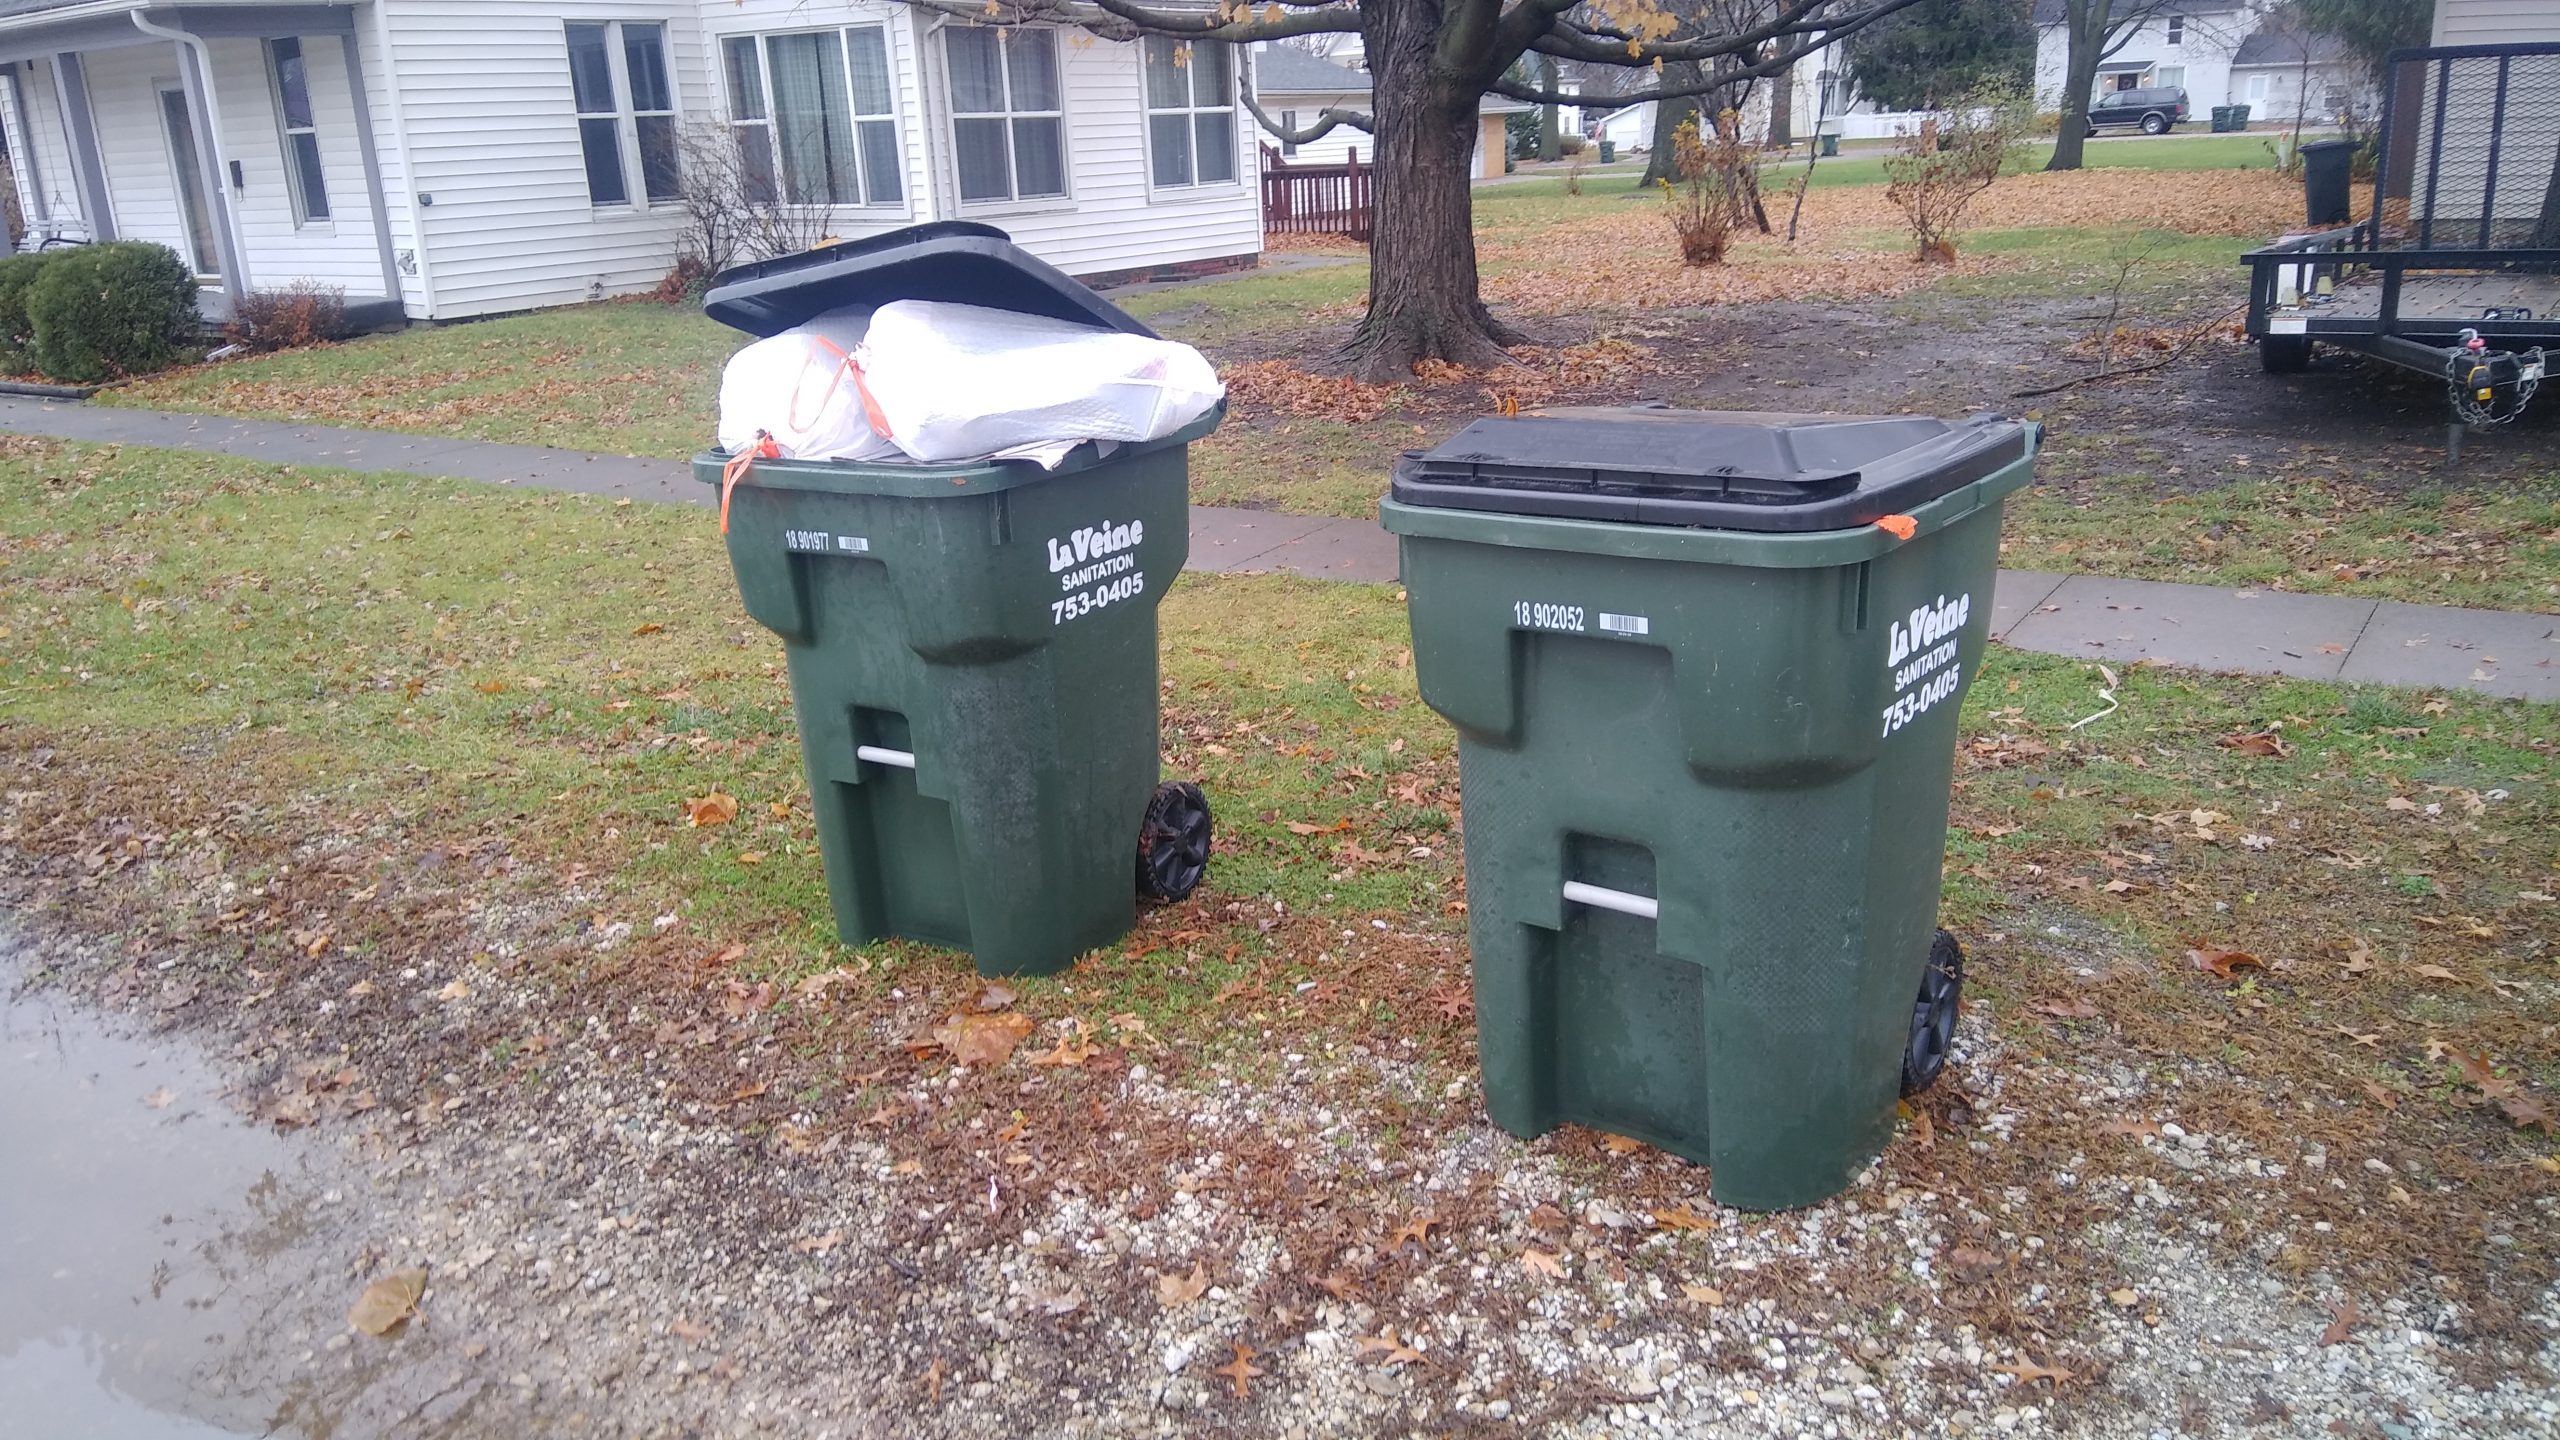 LaVeine Sanitation Residential Garbage Service in Southeast Iowa and Western Illinois